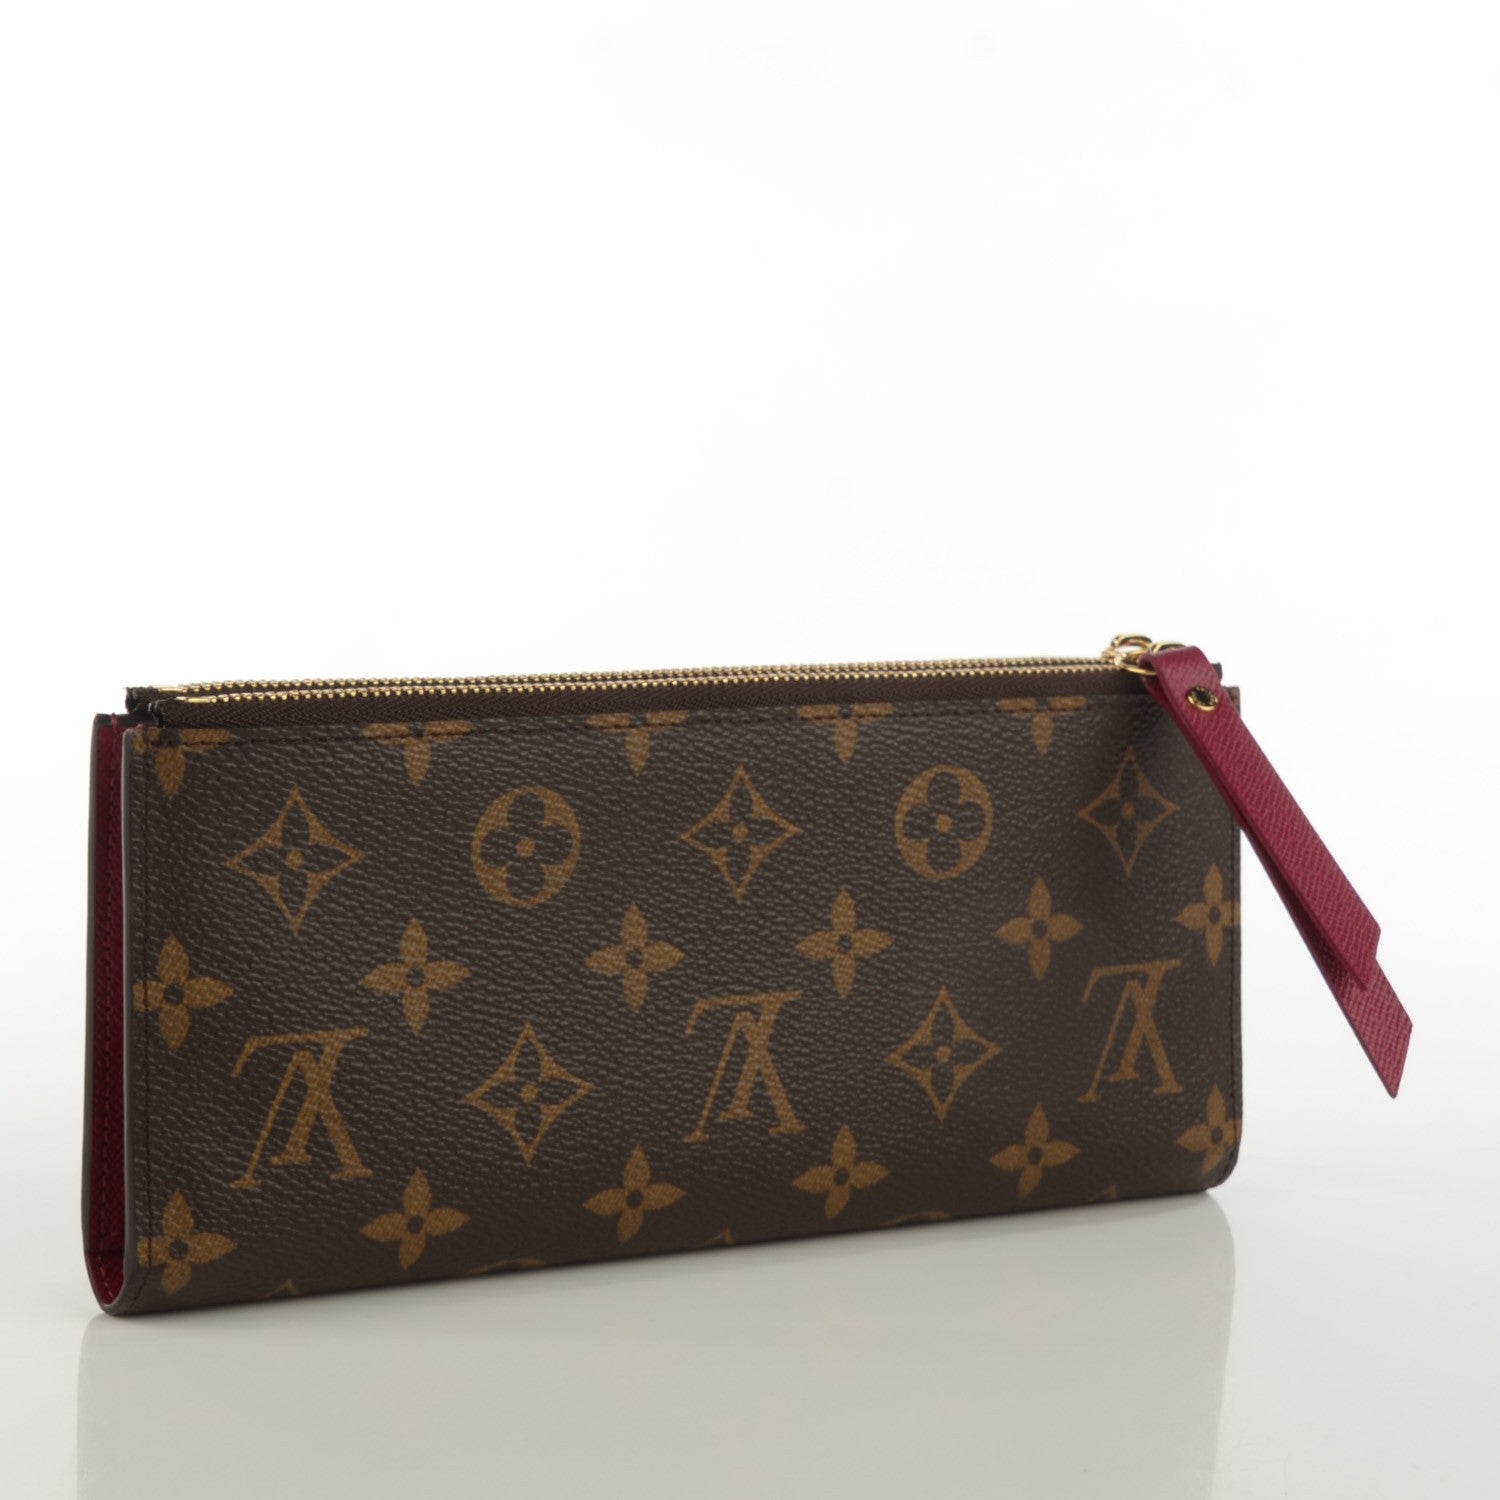 Louis Vuitton Reveal: Brand NEW Adele Wallet 